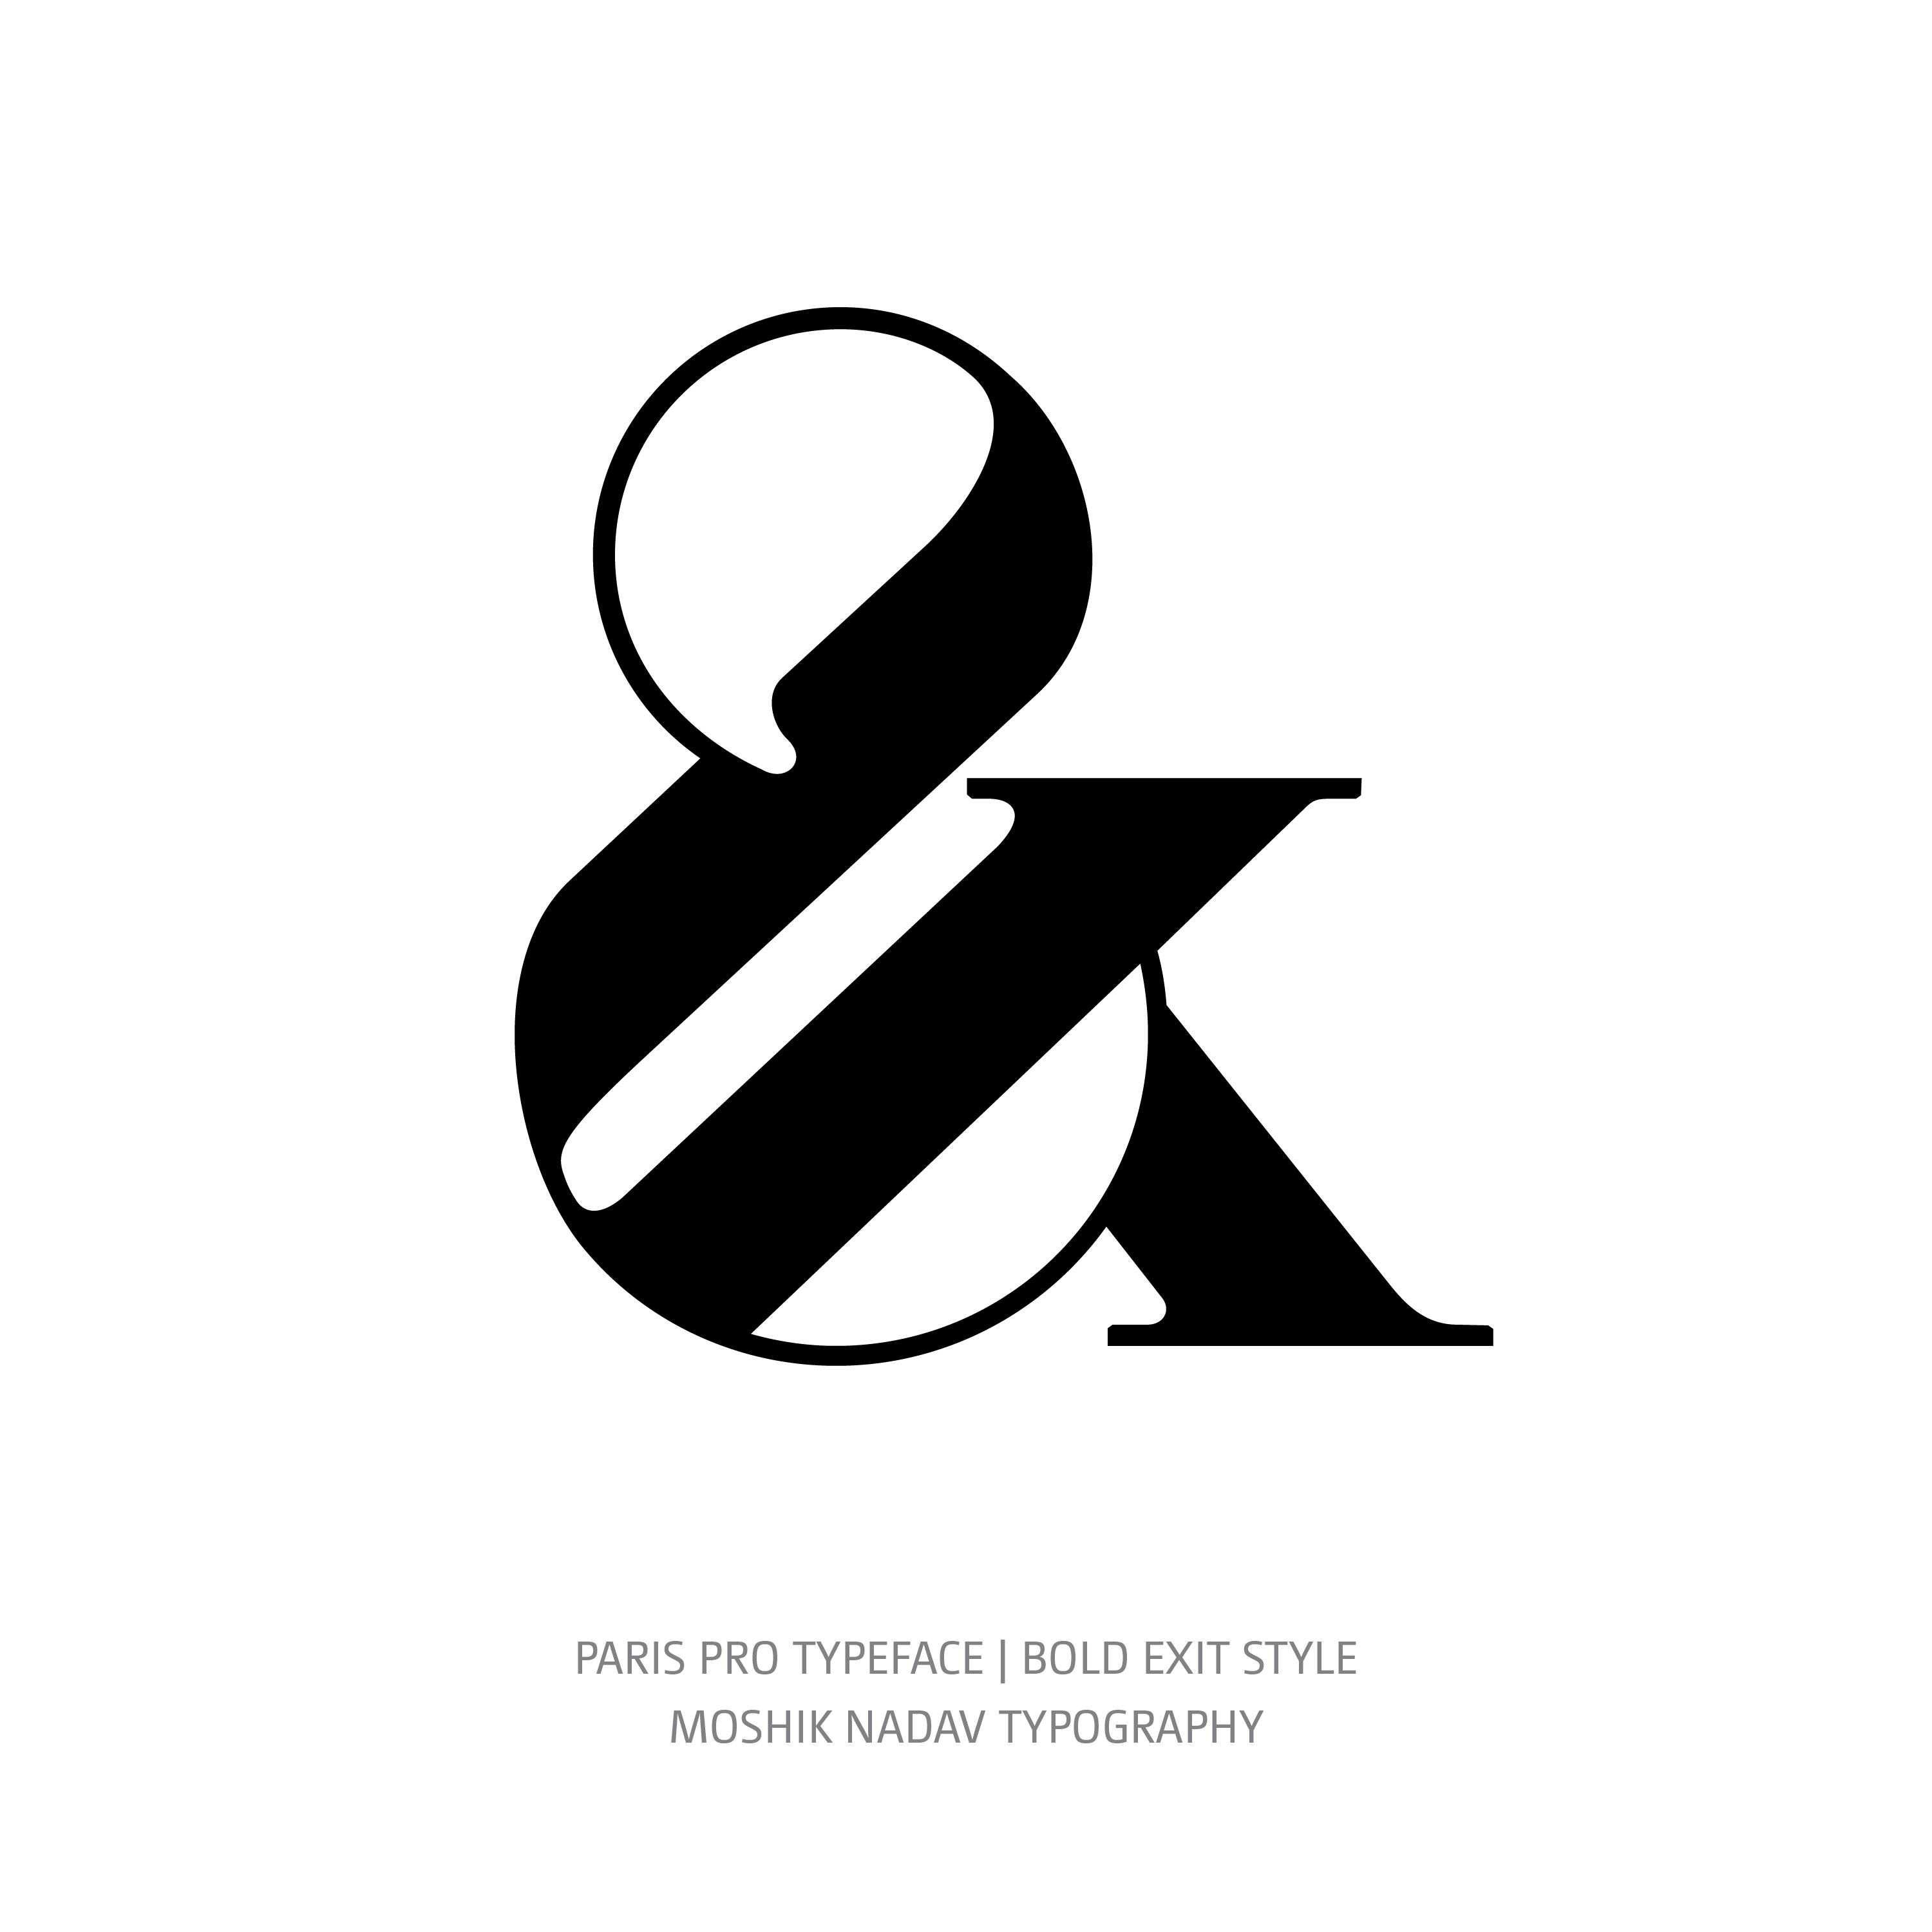 Paris Pro Typeface Bold Exit ampersand